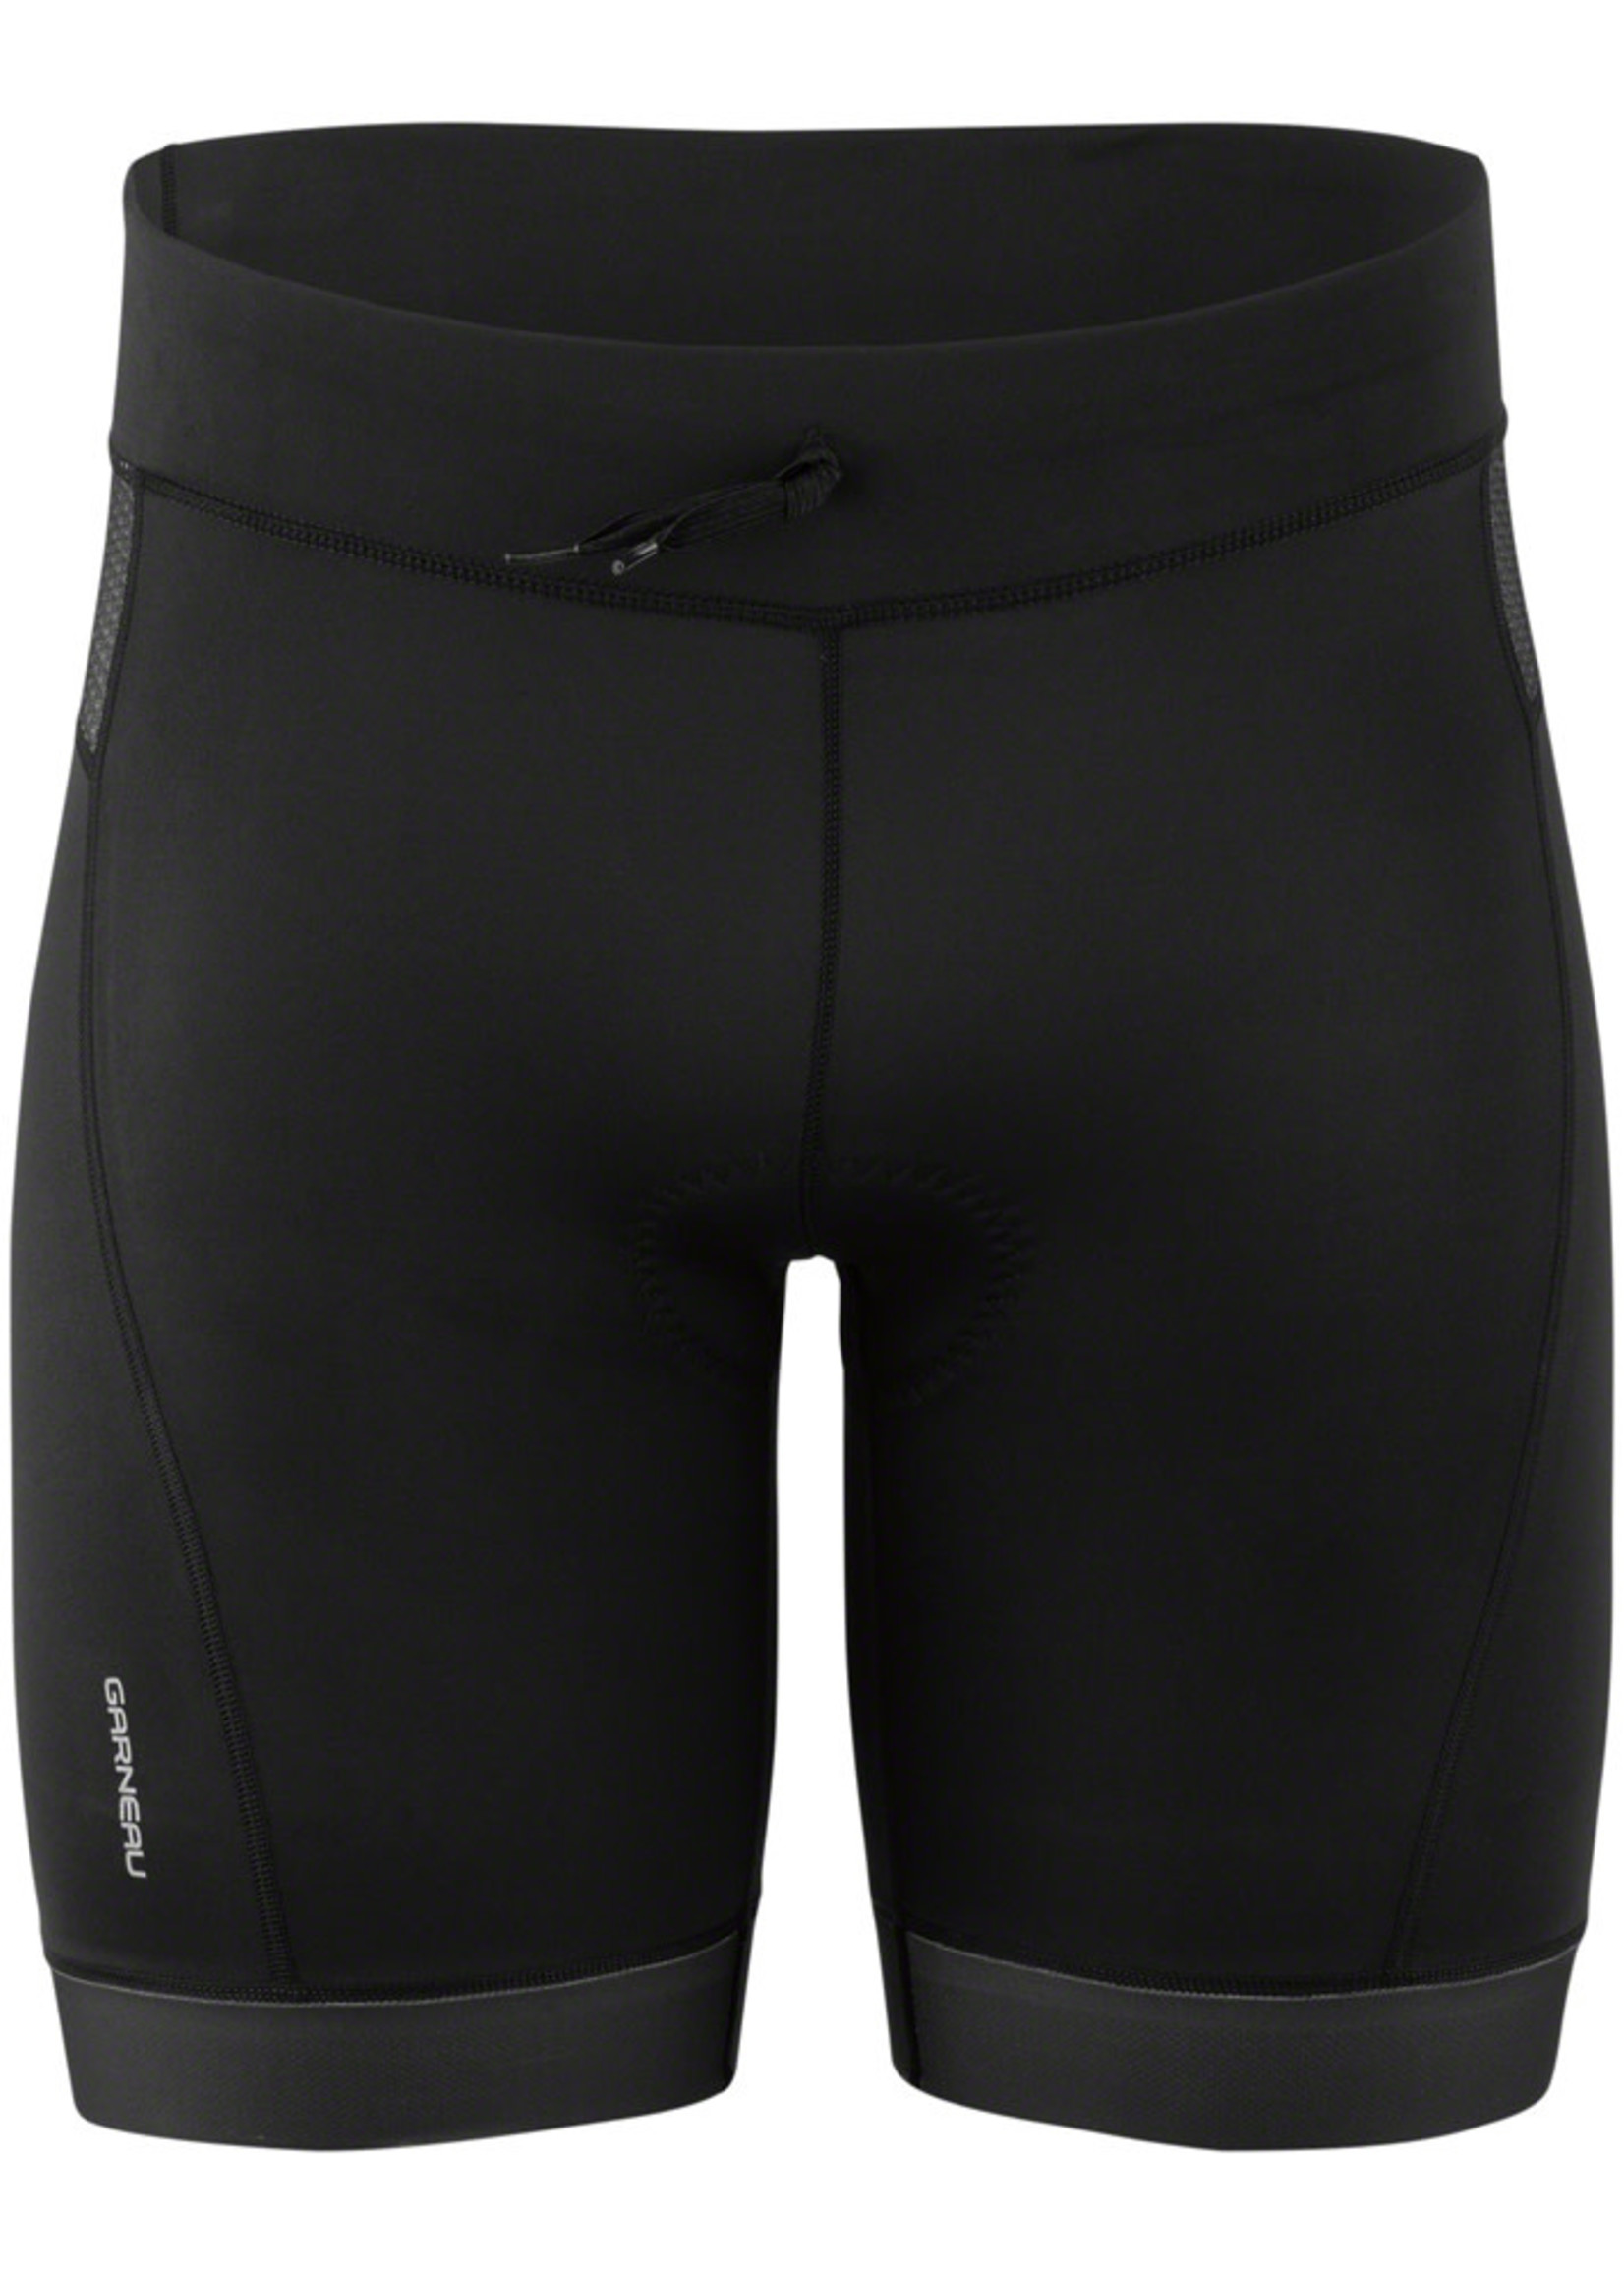 Garneau Sprint Tri Shorts - Black, M